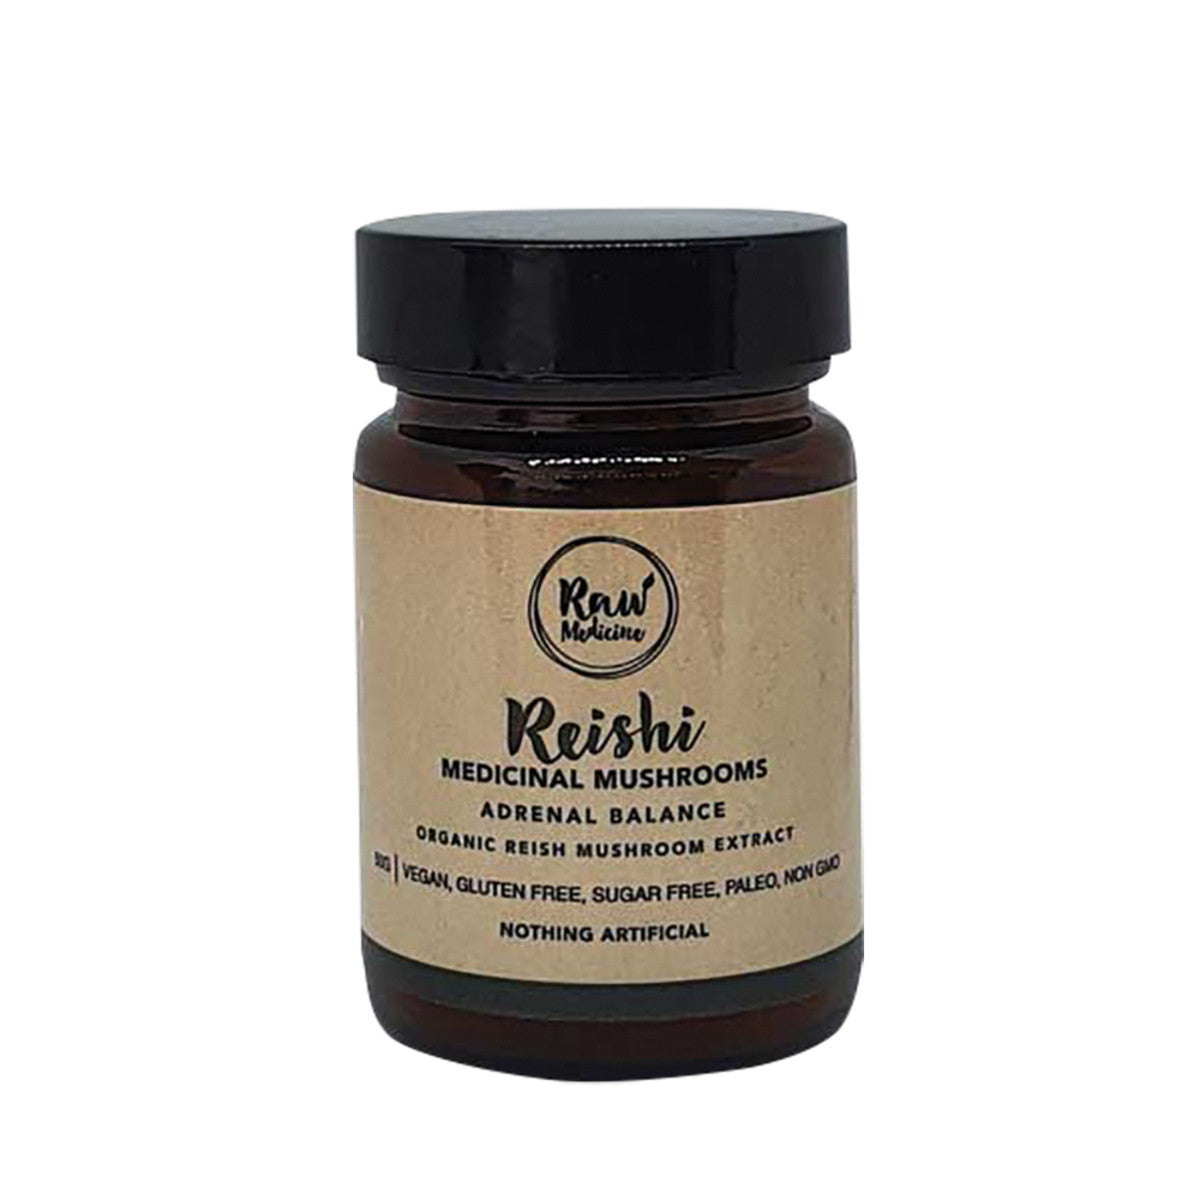 Raw Medicine - Medicinal Mushrooms Reishi